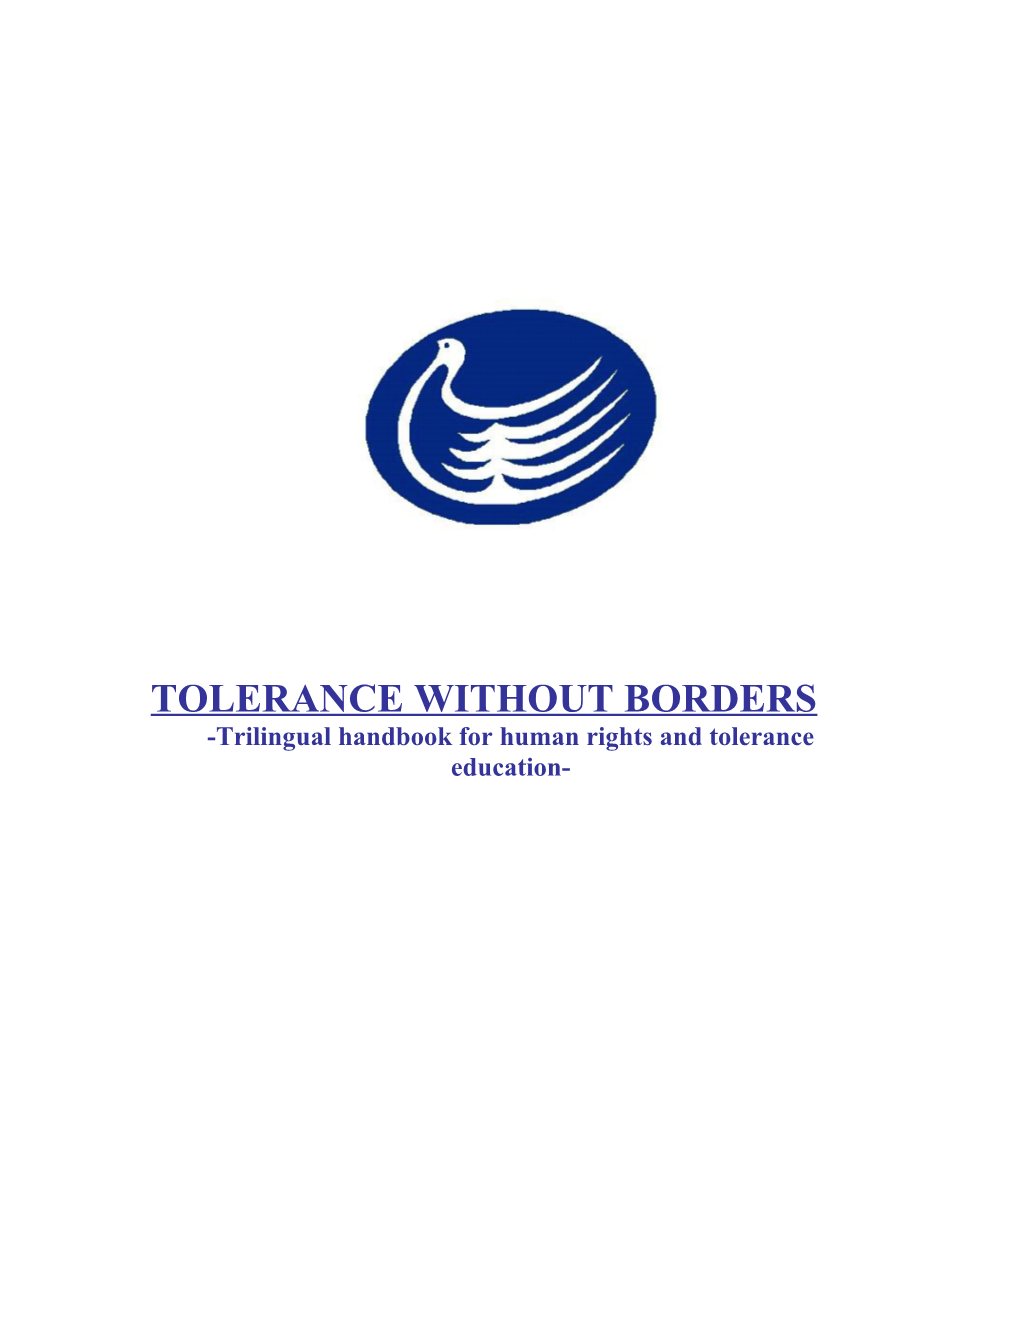 Trilingual Handbook for Human Rights and Tolerance Education